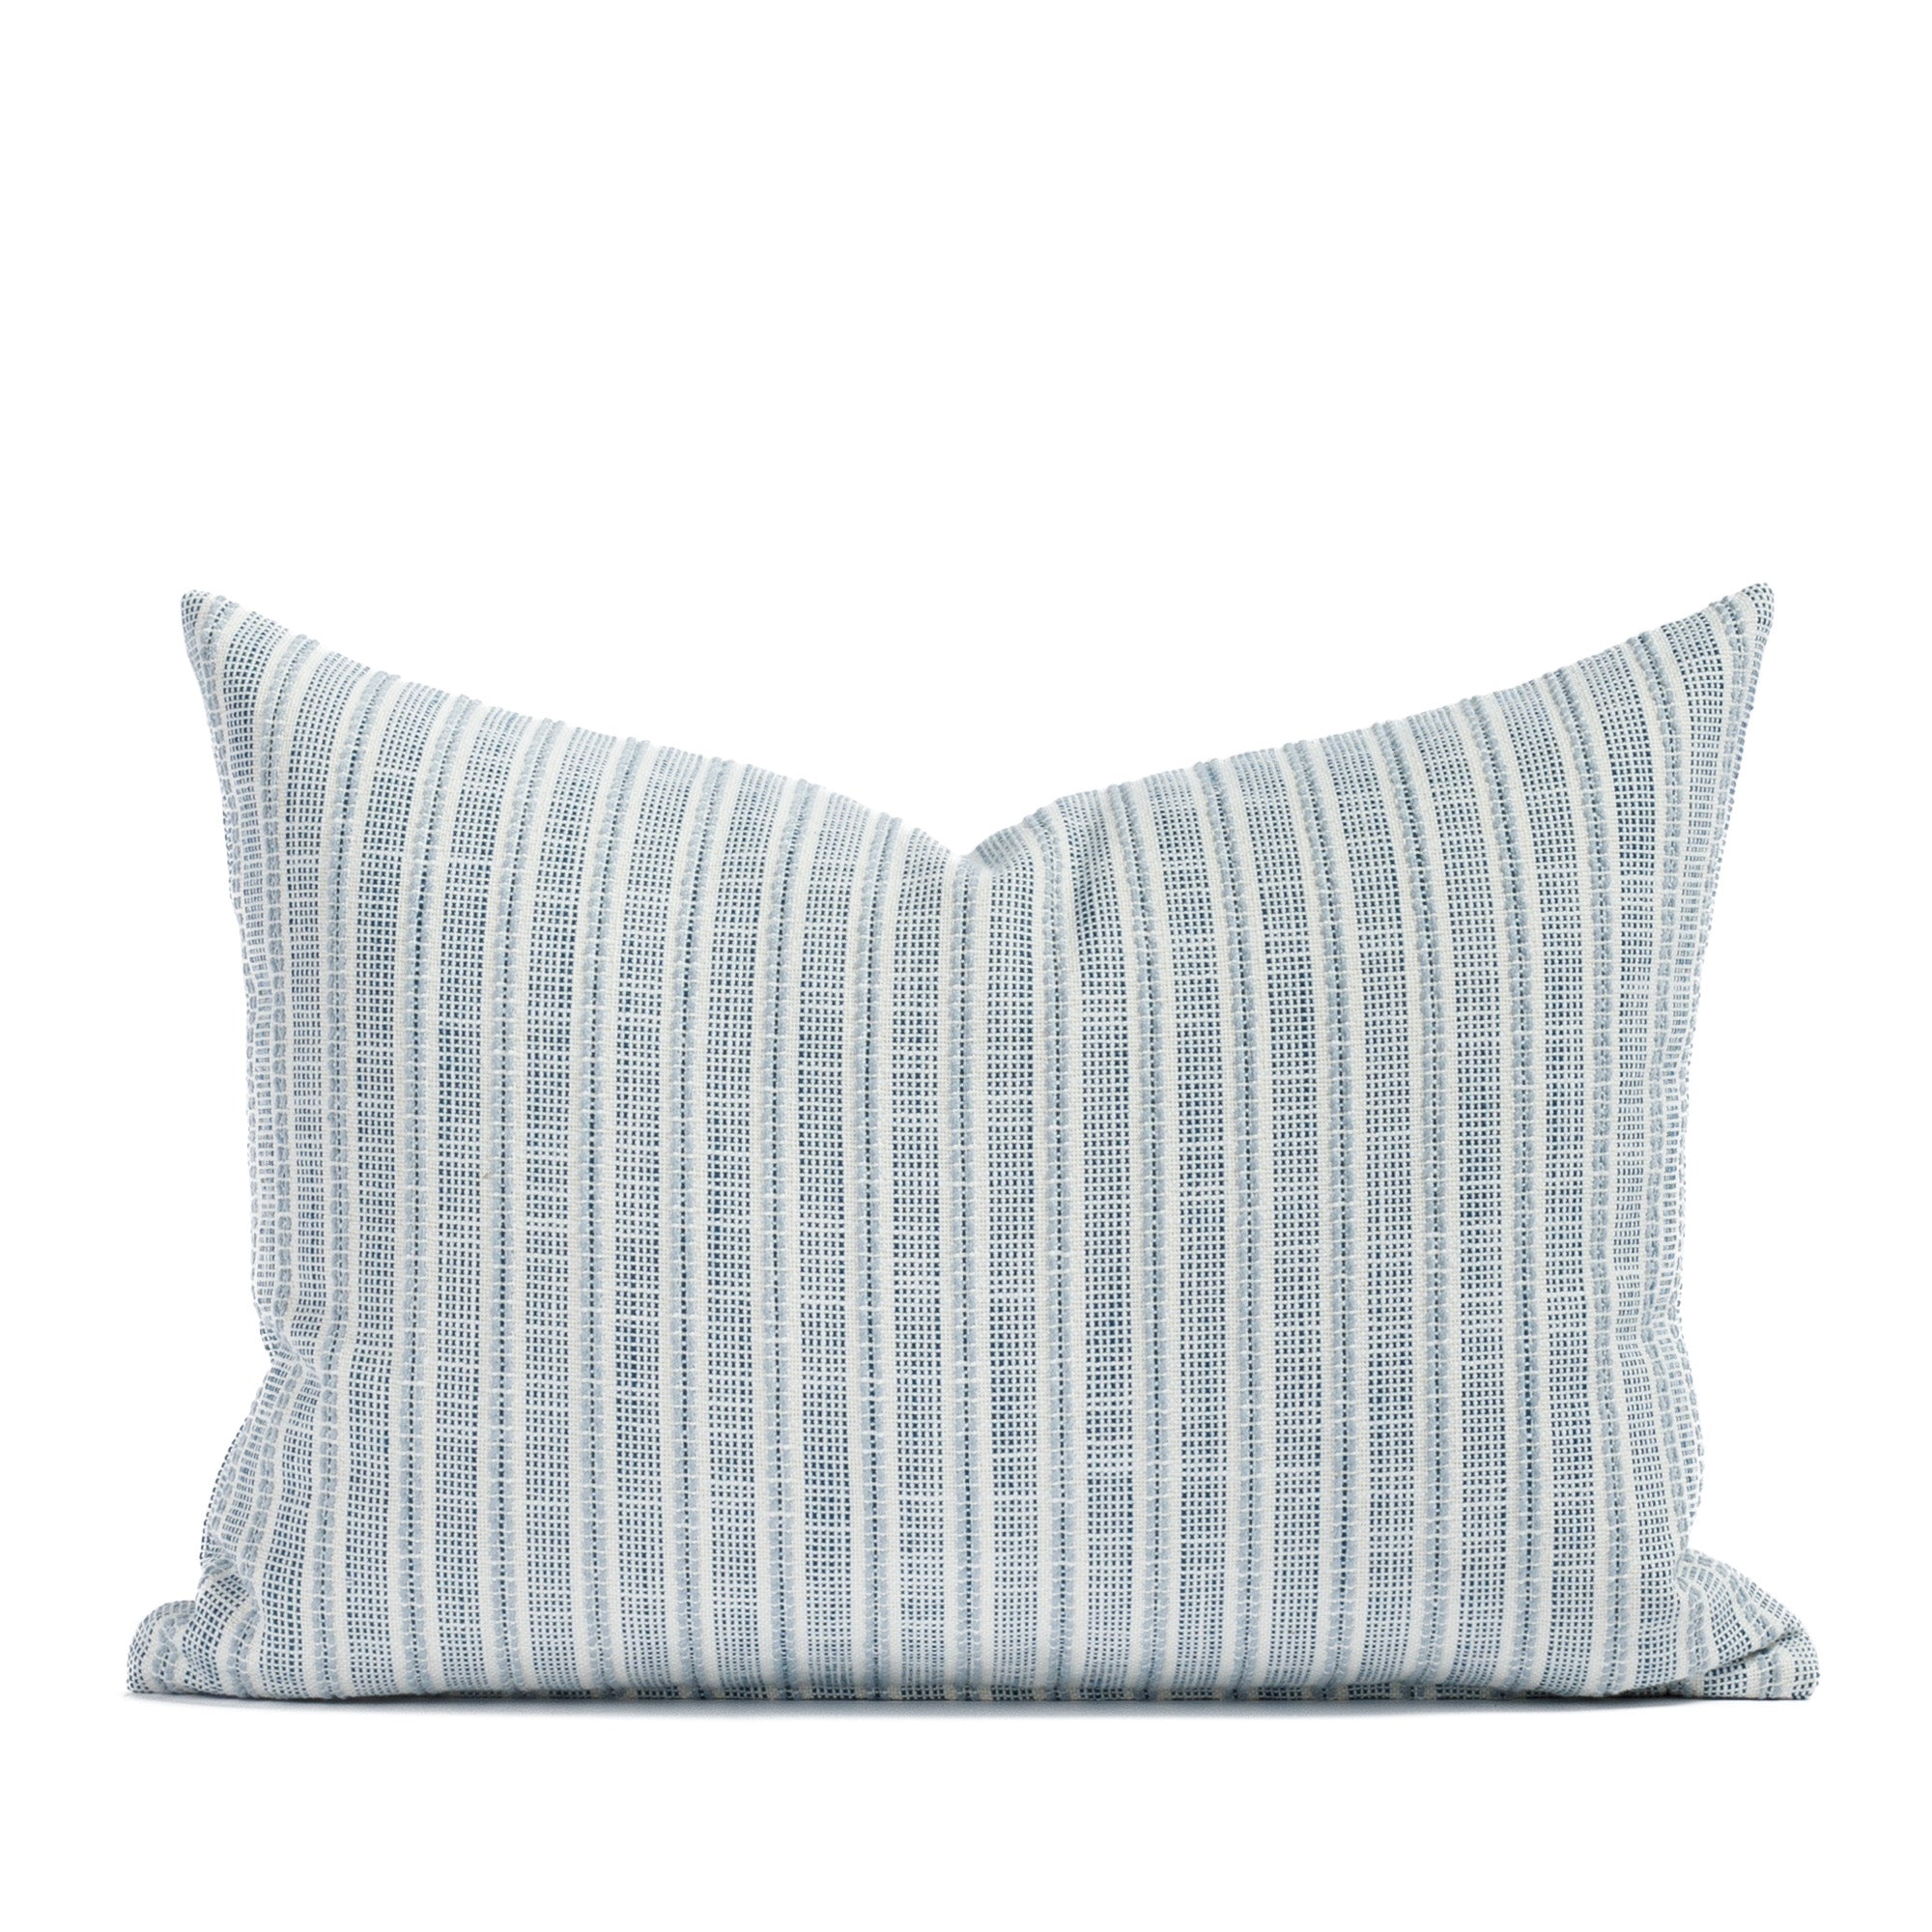 Amalfi Stripe 14x20 lumbar pillow indigo, a white and blue outdoor throw pillow from Tonic Living